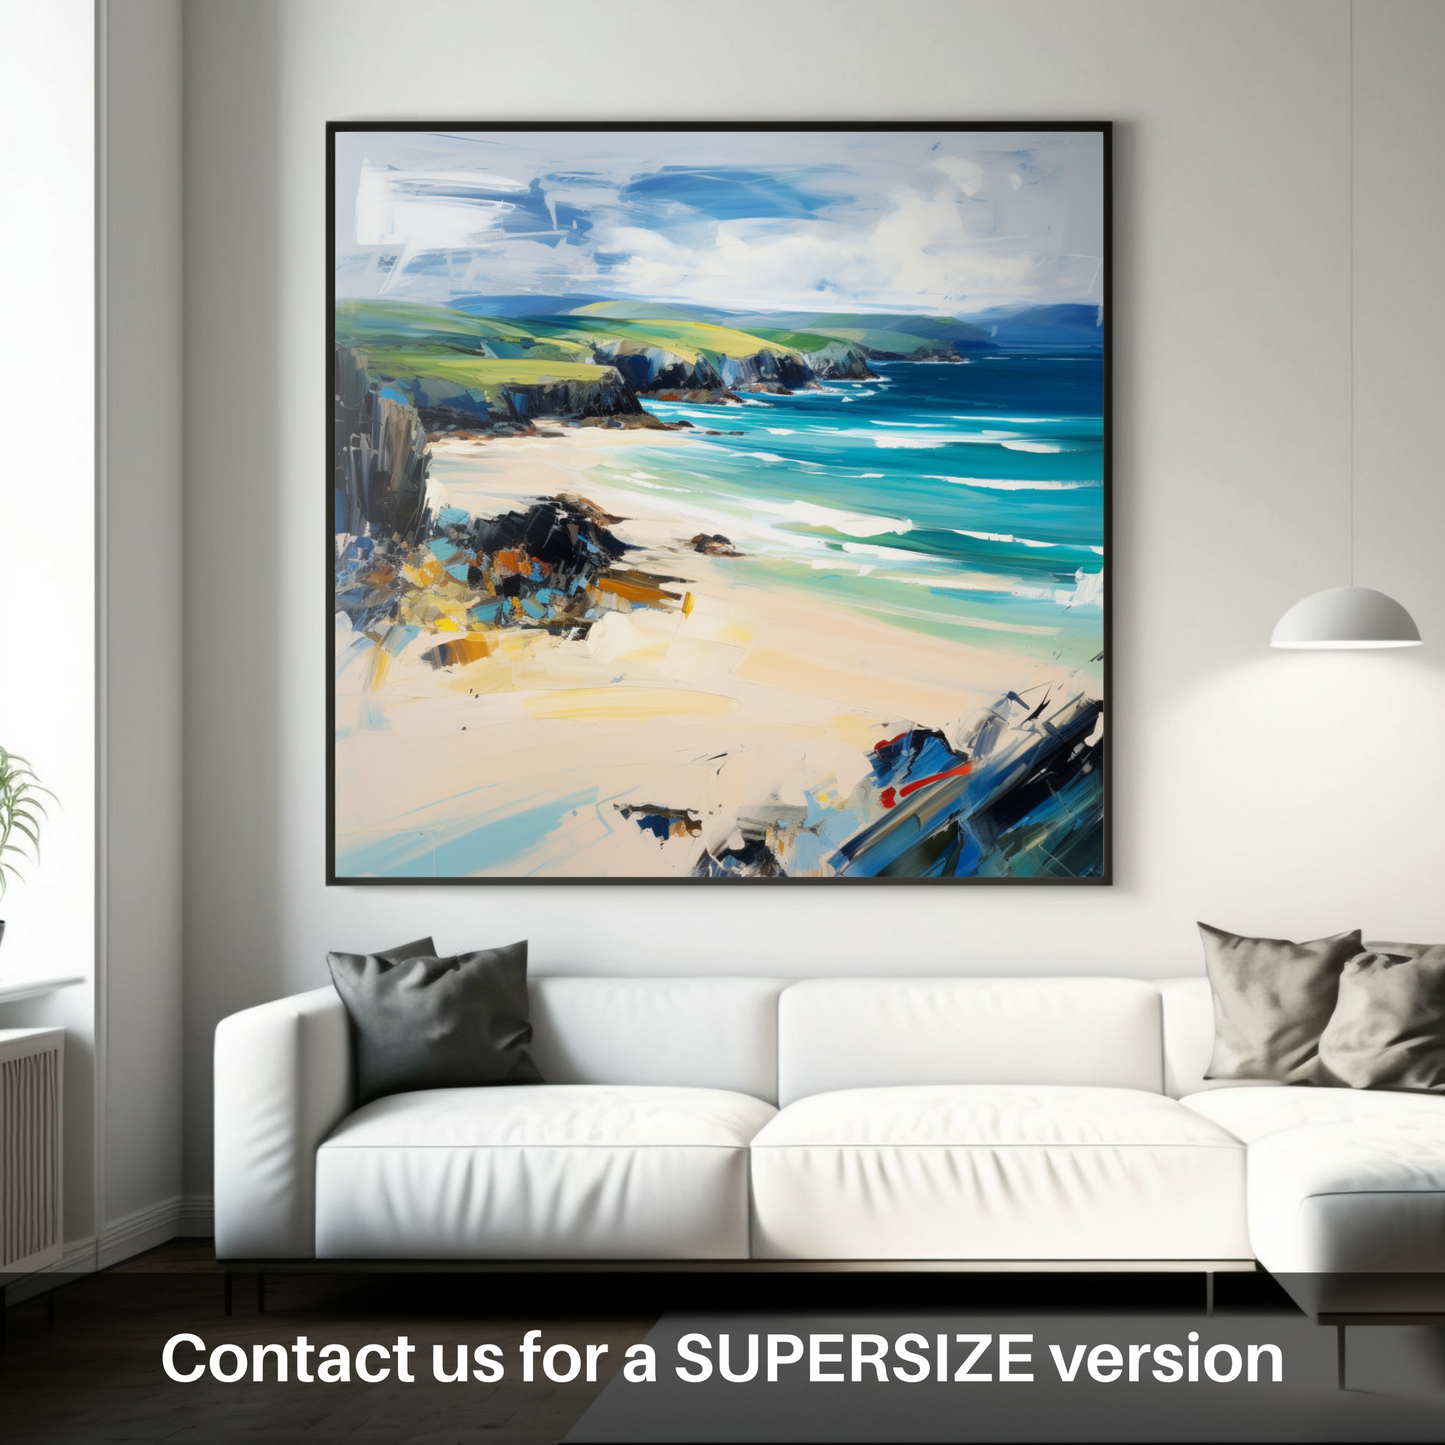 Huge supersize print of Durness Beach, Sutherland